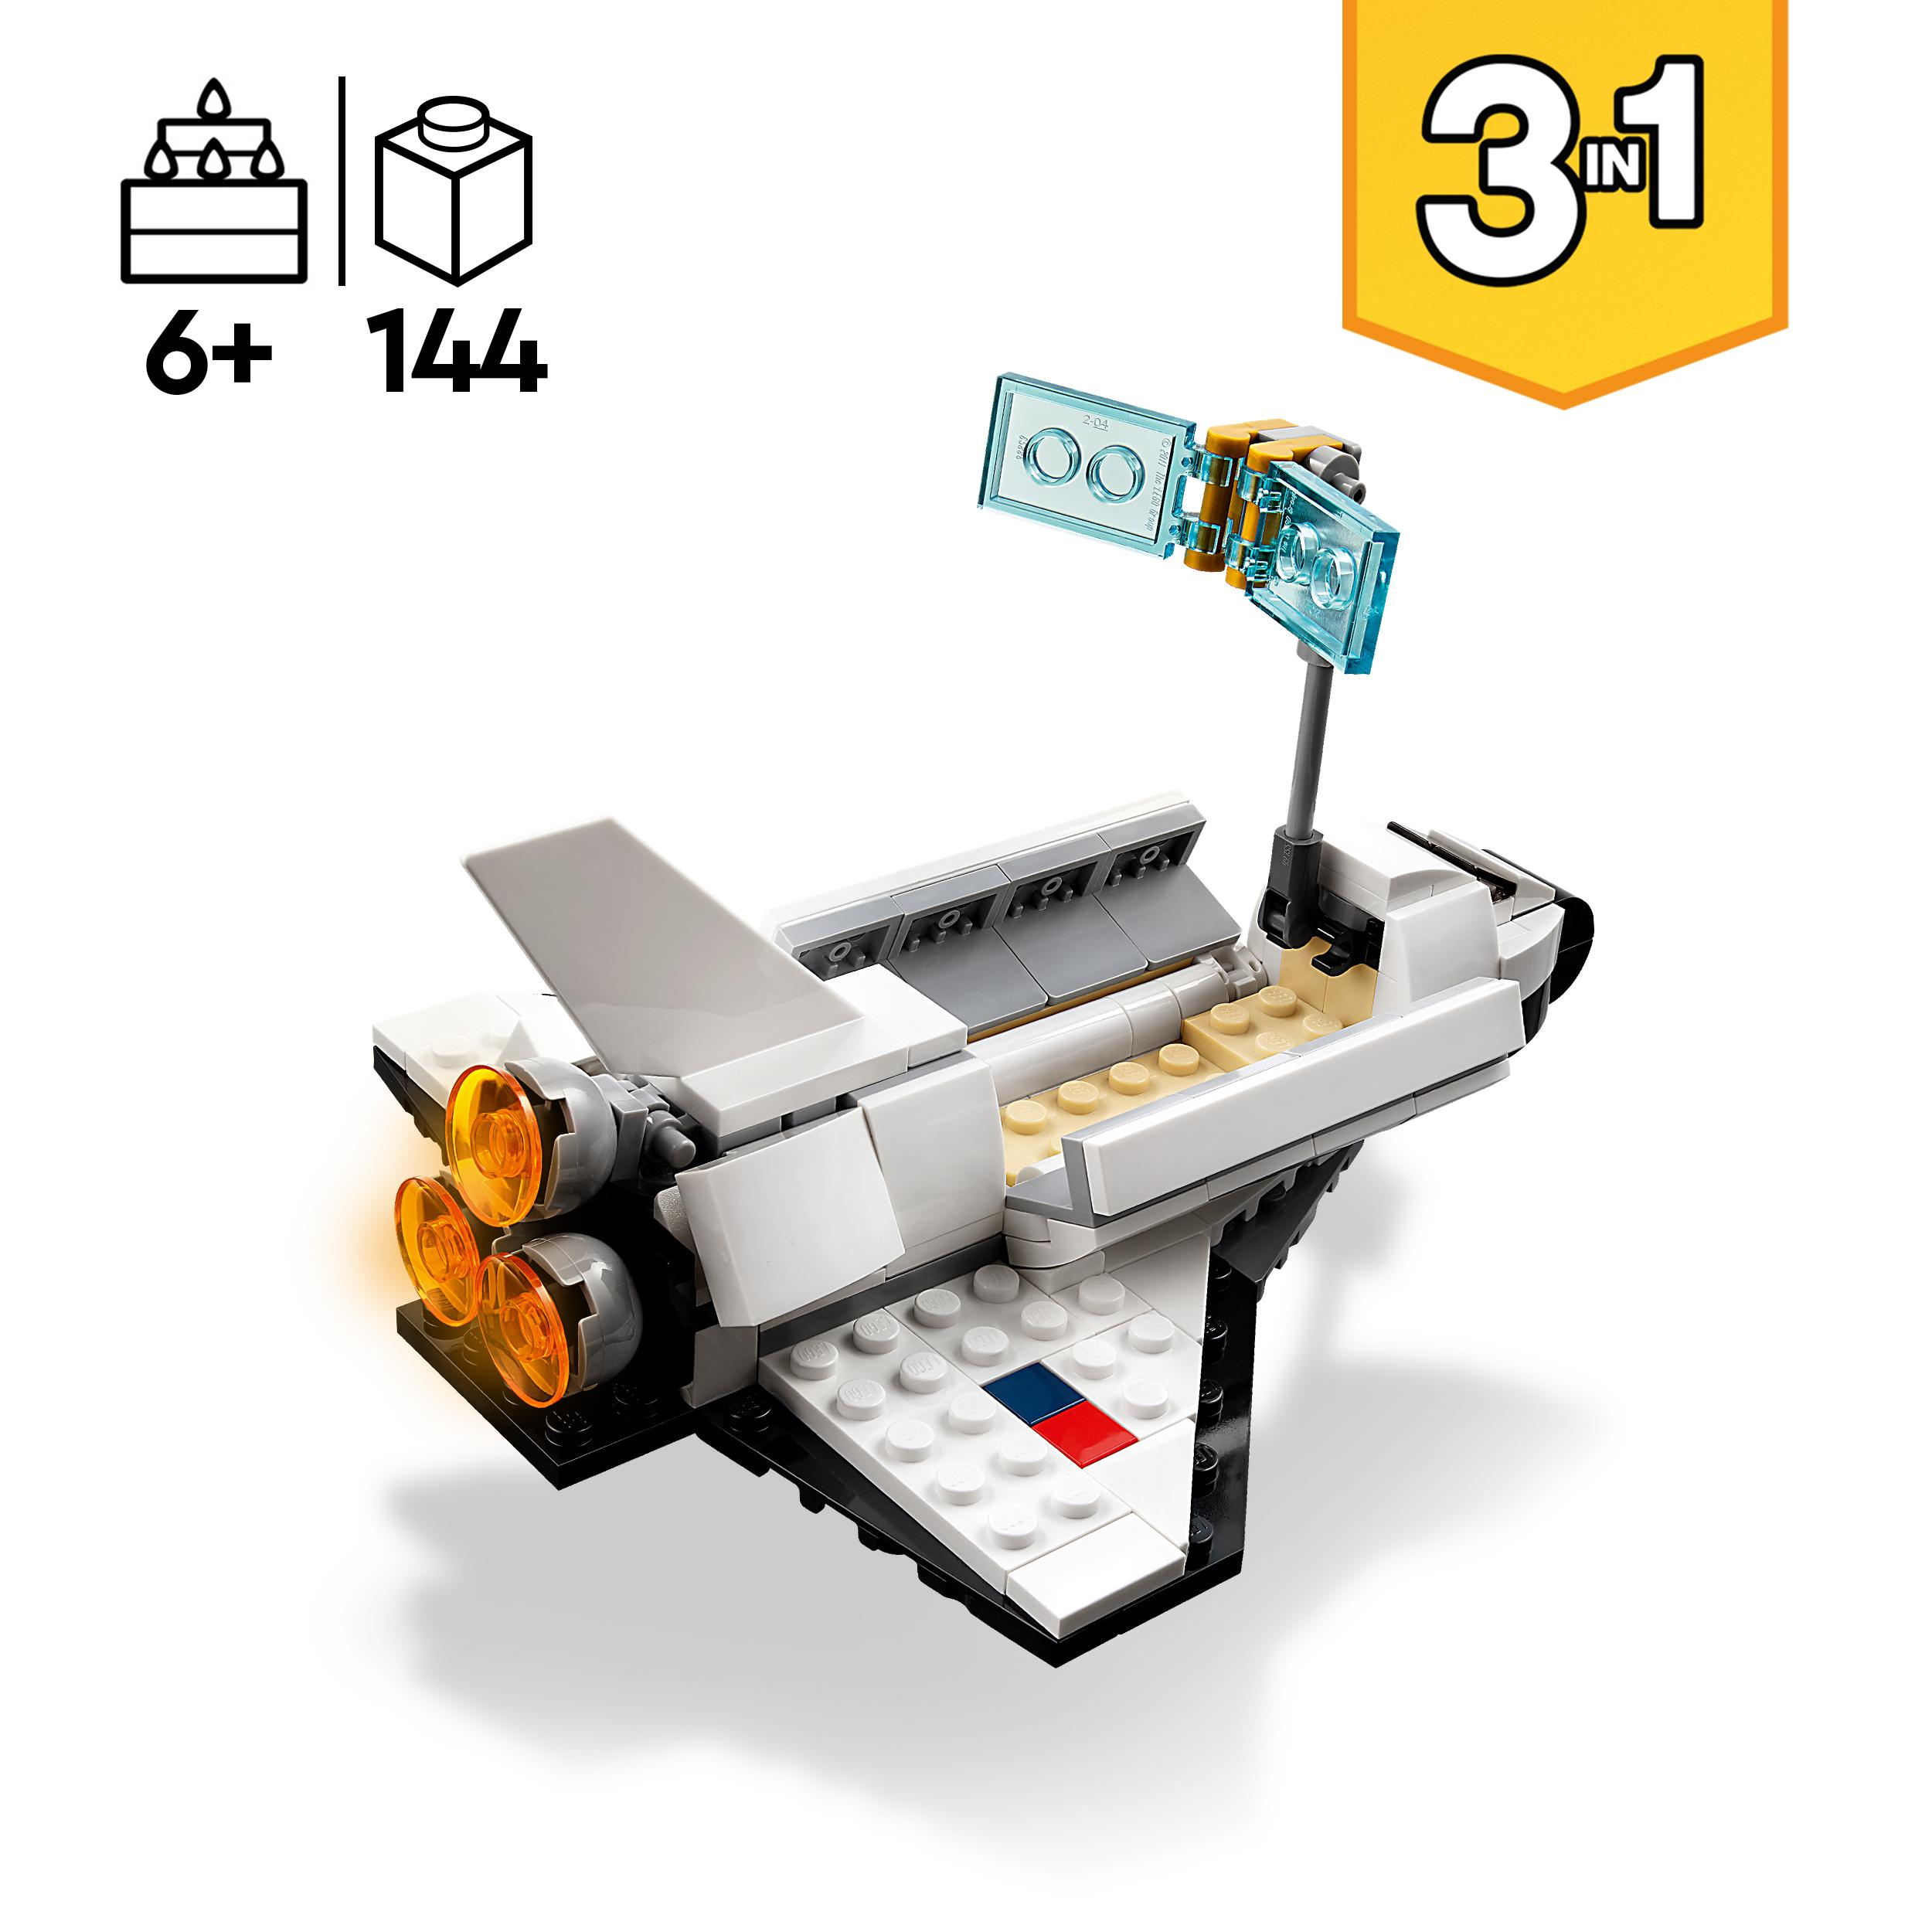 Bausatz, 31134 Mehrfarbig Spaceshuttle Creator LEGO